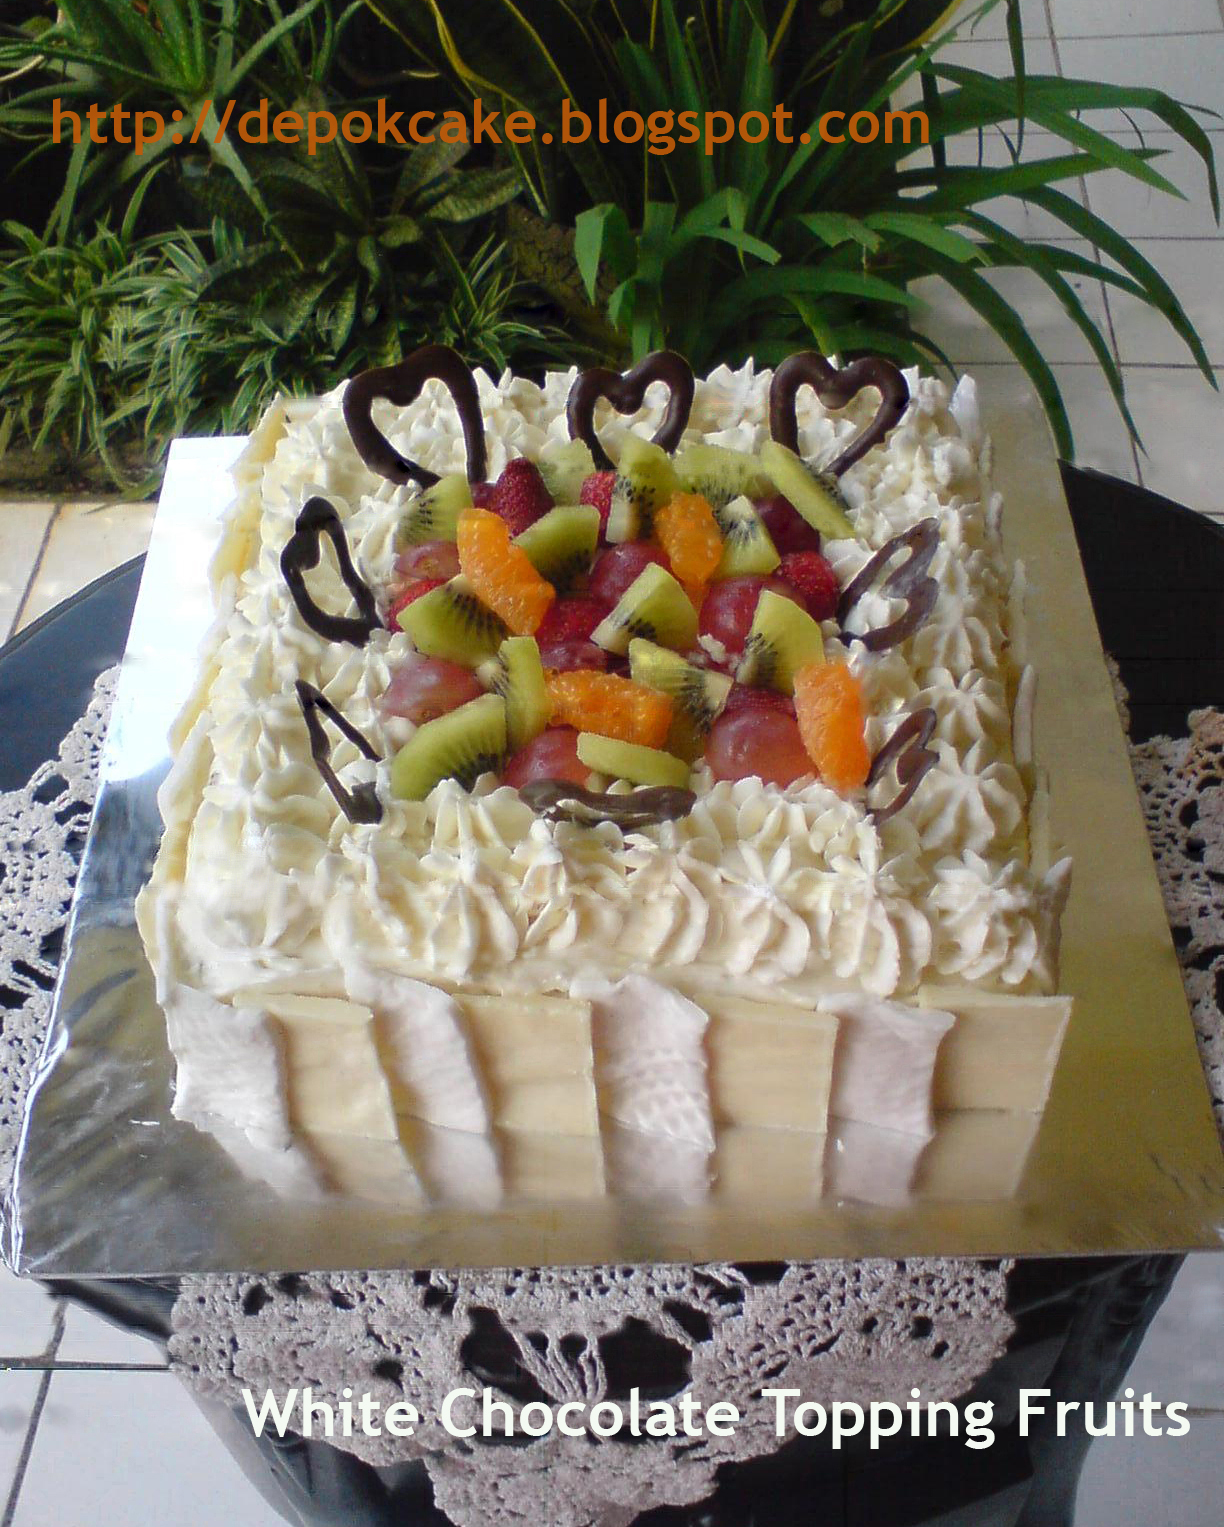 DEPOK CAKE: Kue Ulang Tahun Untuk Dewasa dan Remaja